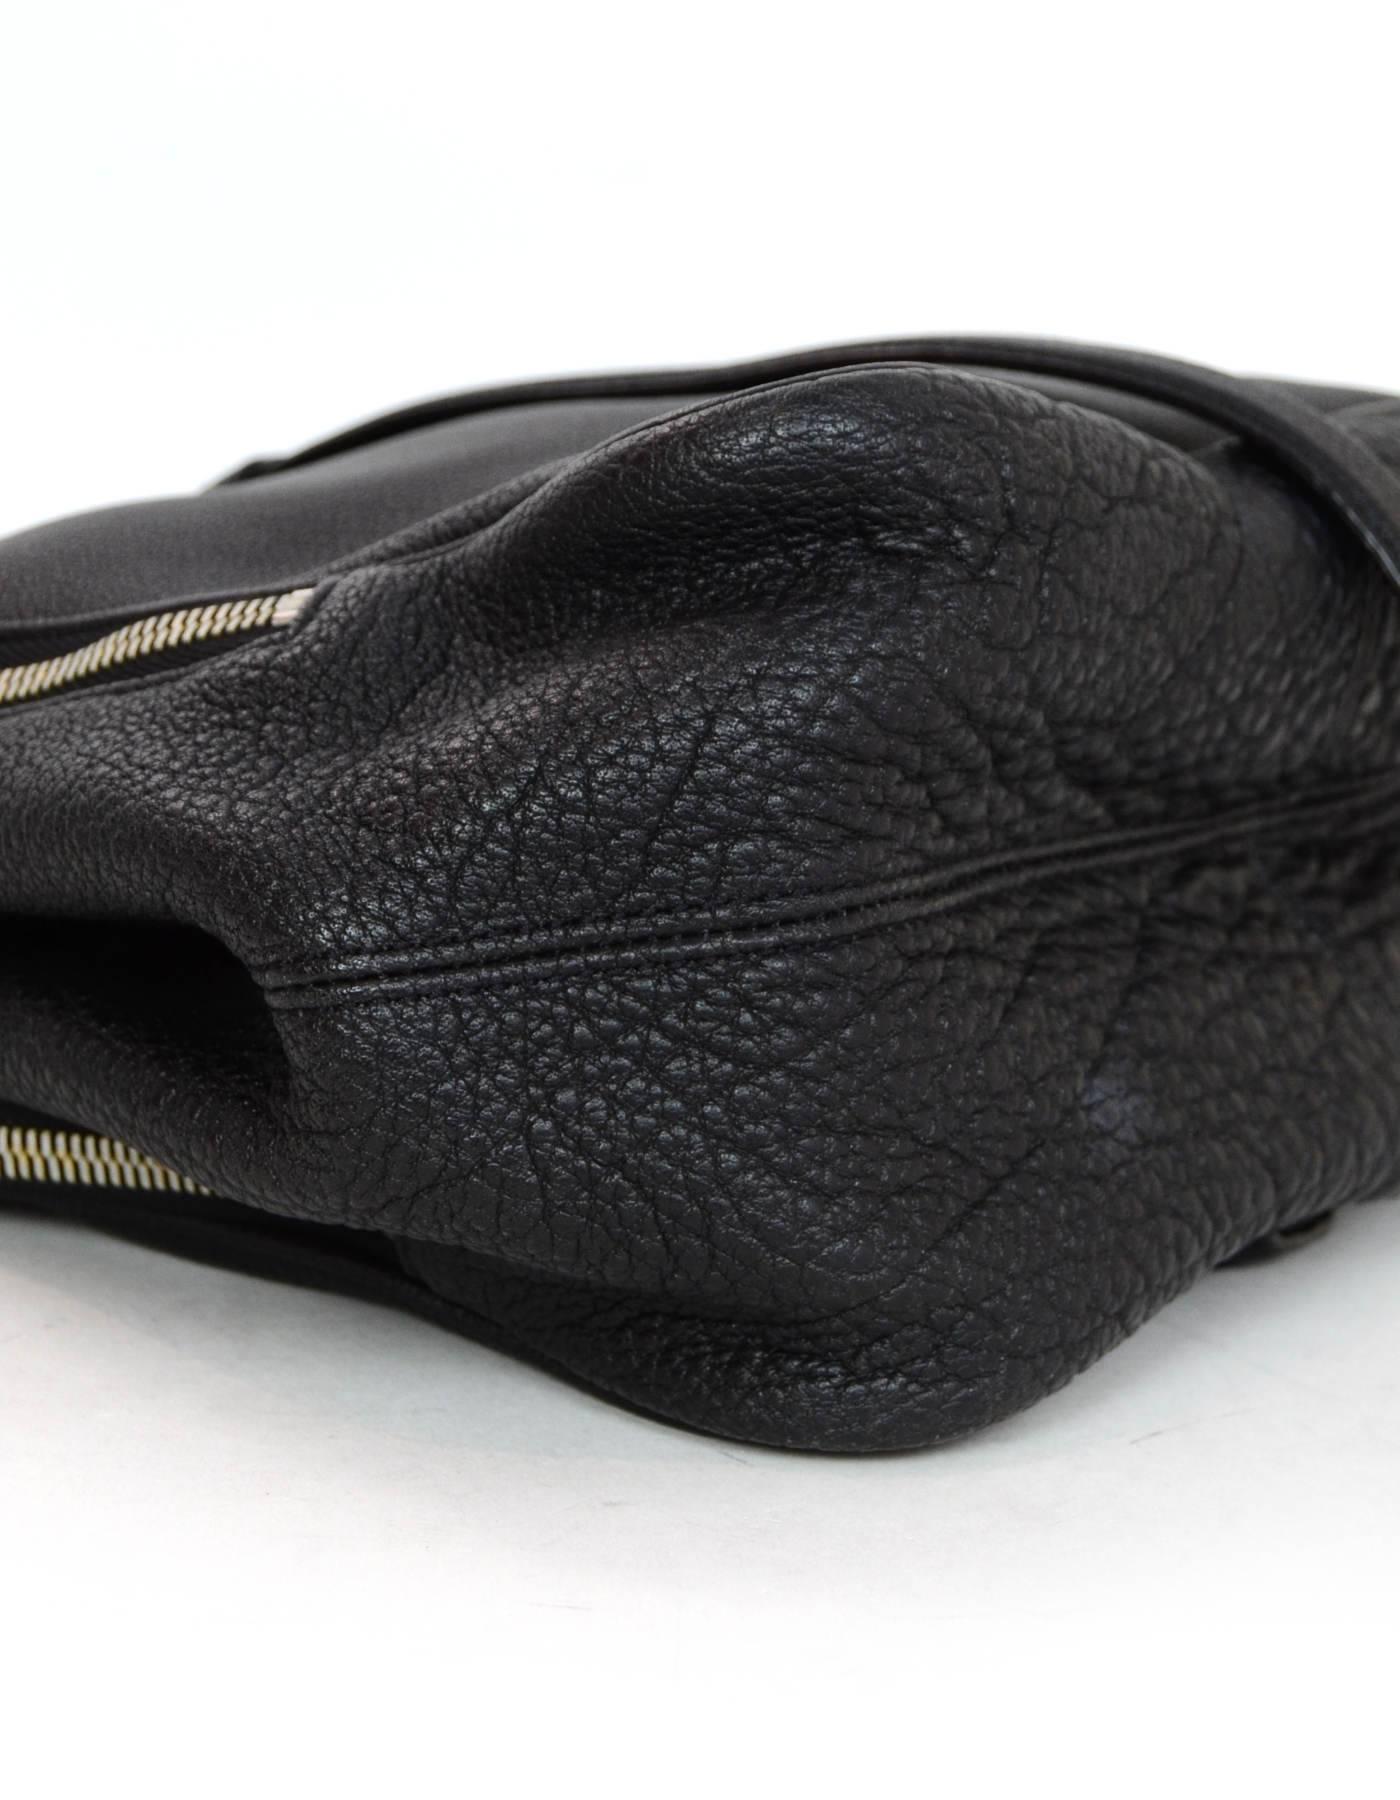 Women's Alexander Wang Black Leather Anita Satchel Bag